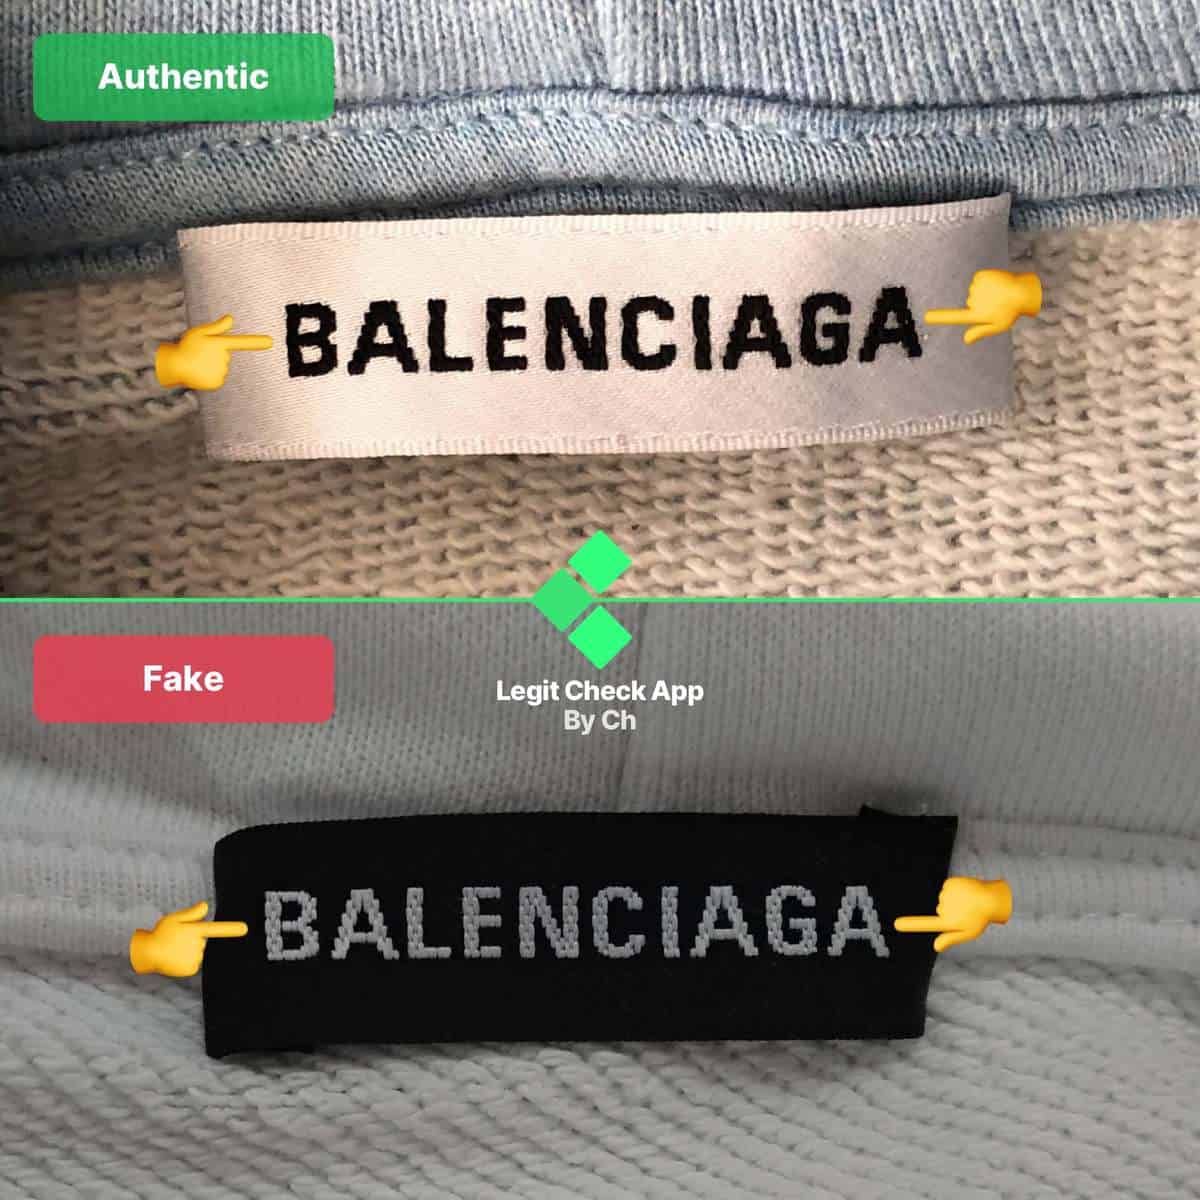 How To Spot Fake Balenciaga Hoodies (Any) - Legit Check